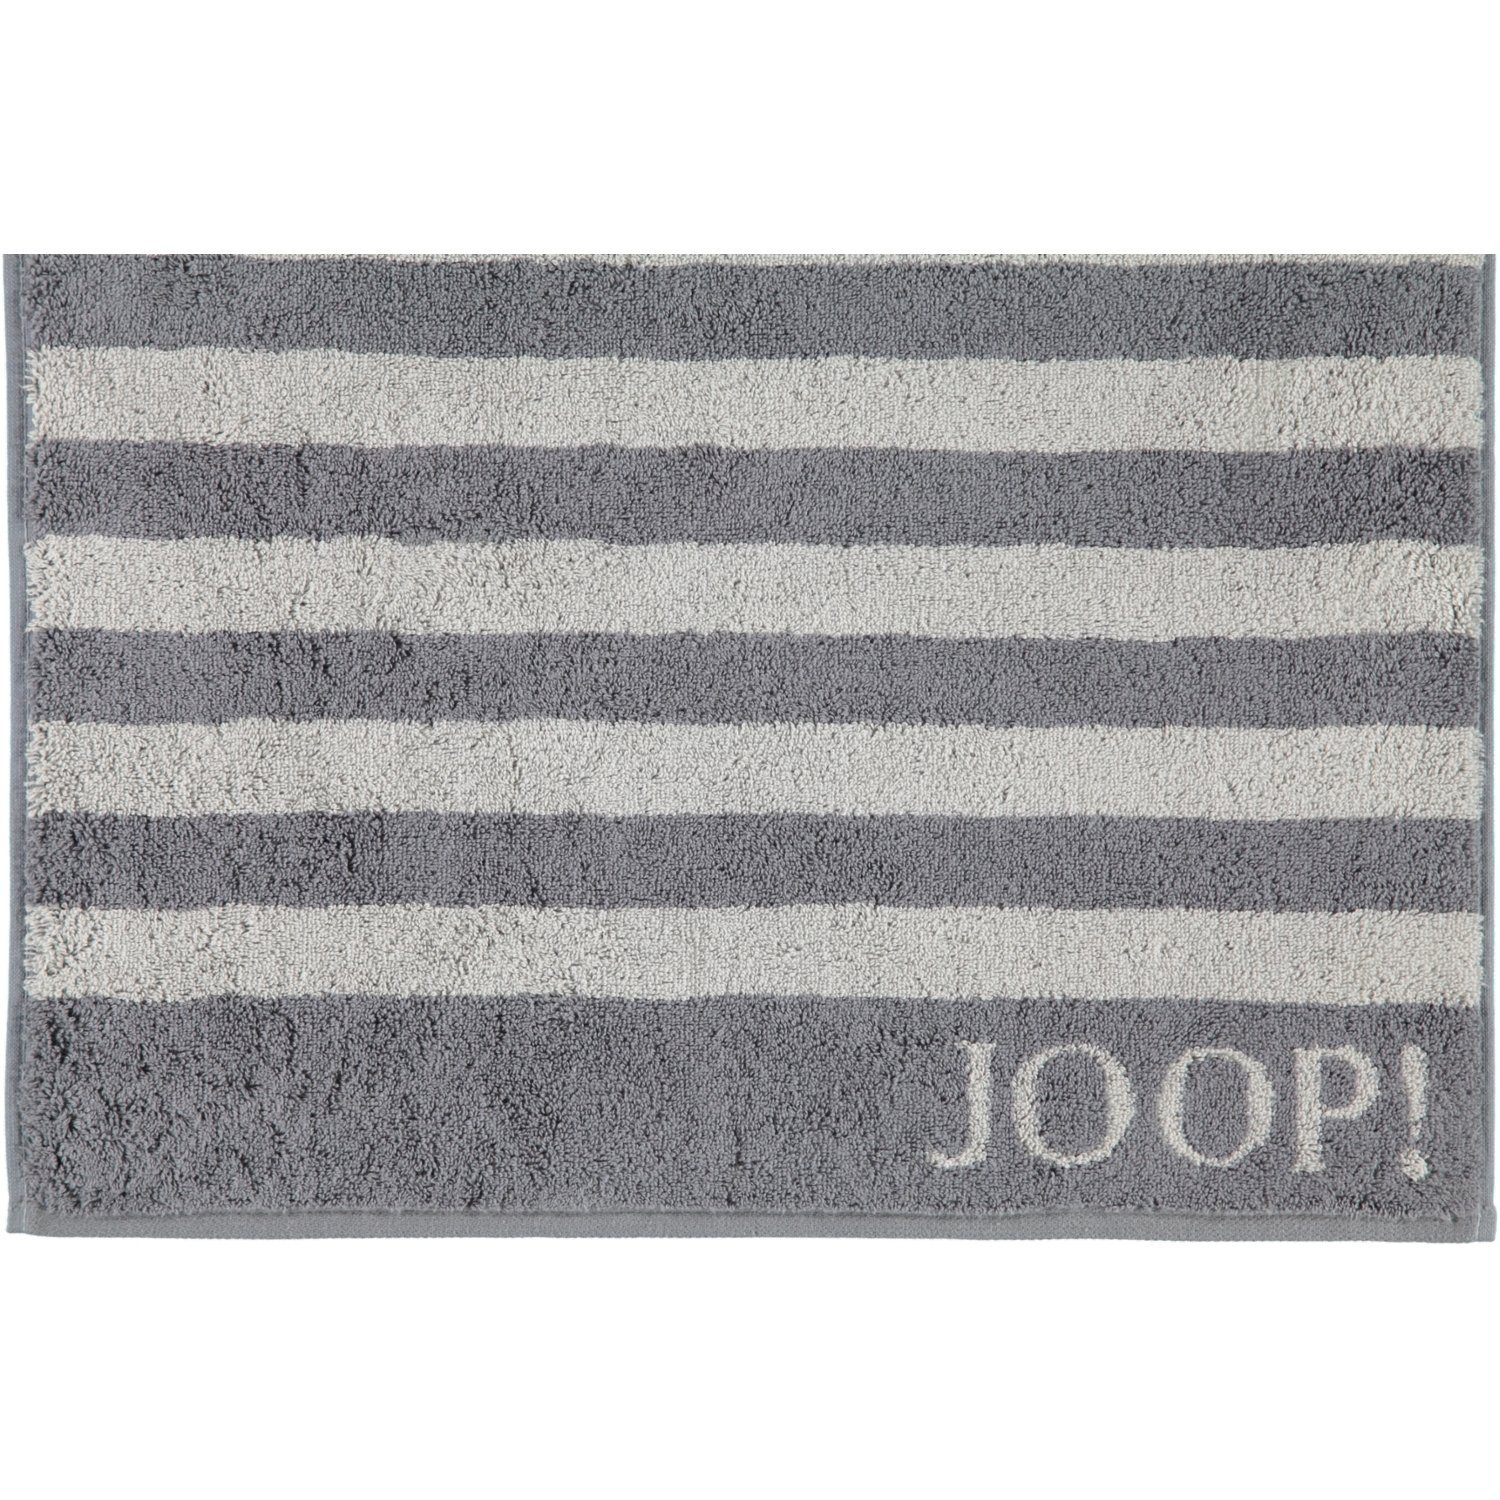 Joop! Handtücher Classic Stripes 1610, Baumwolle Anthrazit 100% (77)